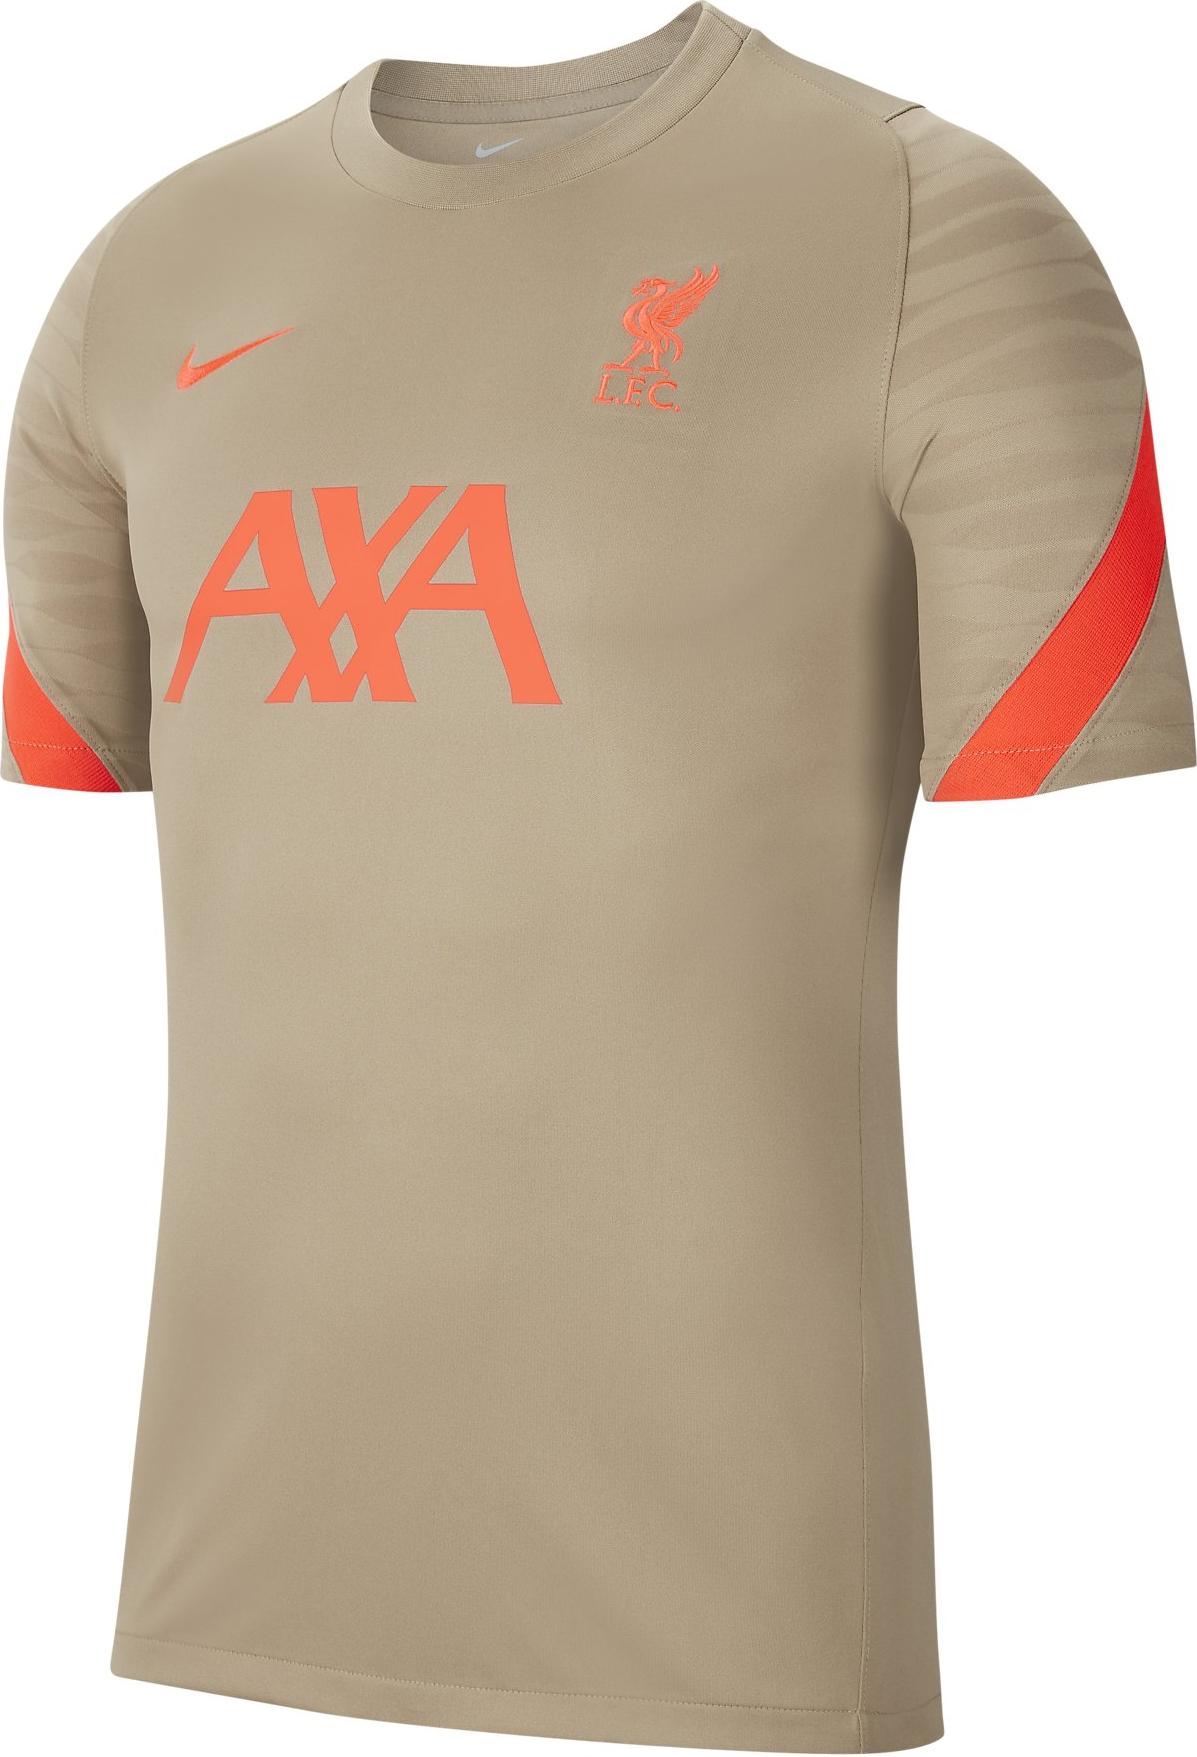 Camiseta Nike Liverpool FC Strike Men s Short-Sleeve Soccer Top